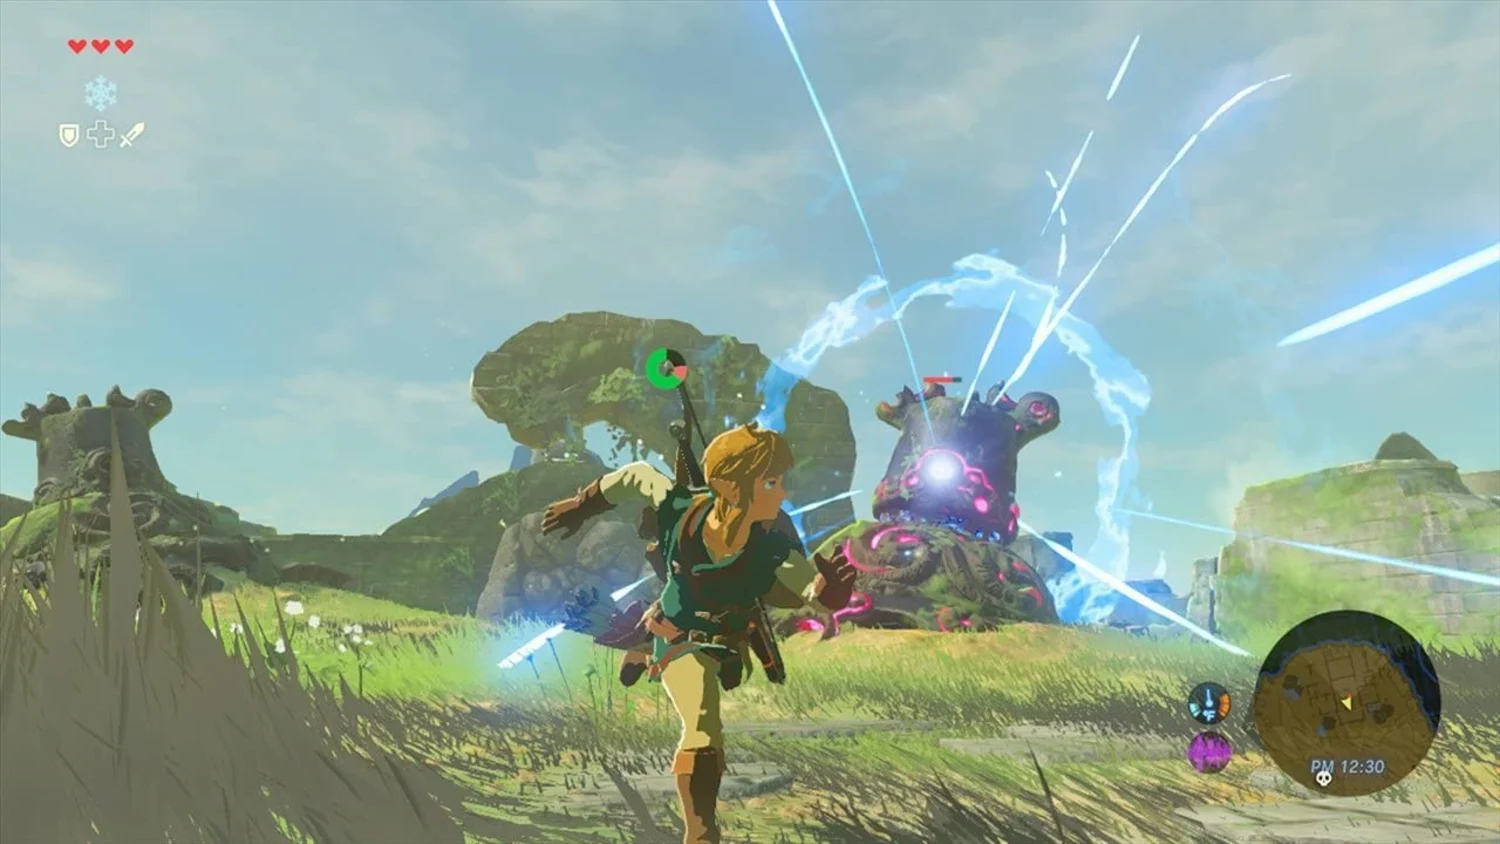 Jogo Nintendo The Legend Of Zelda Nintendo Switch